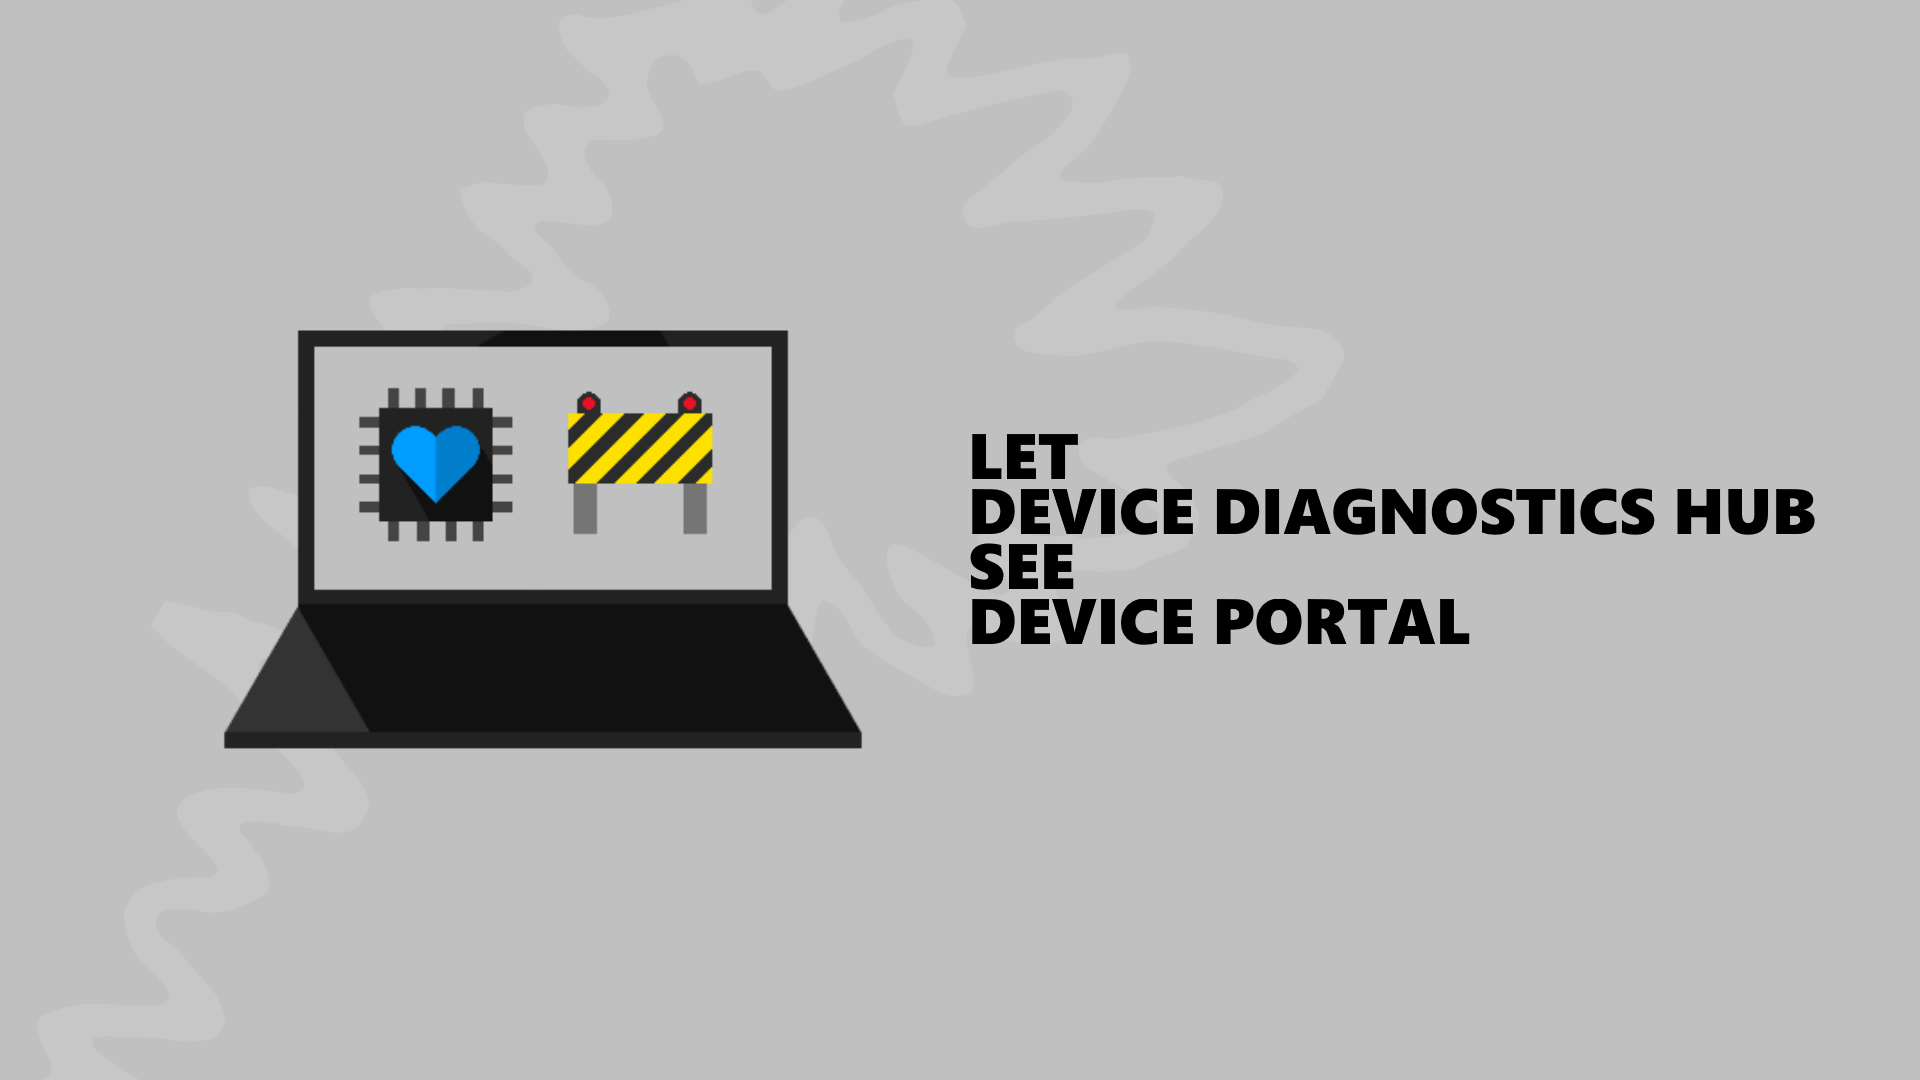 Let Device Diagnostics HUB see Device Portal